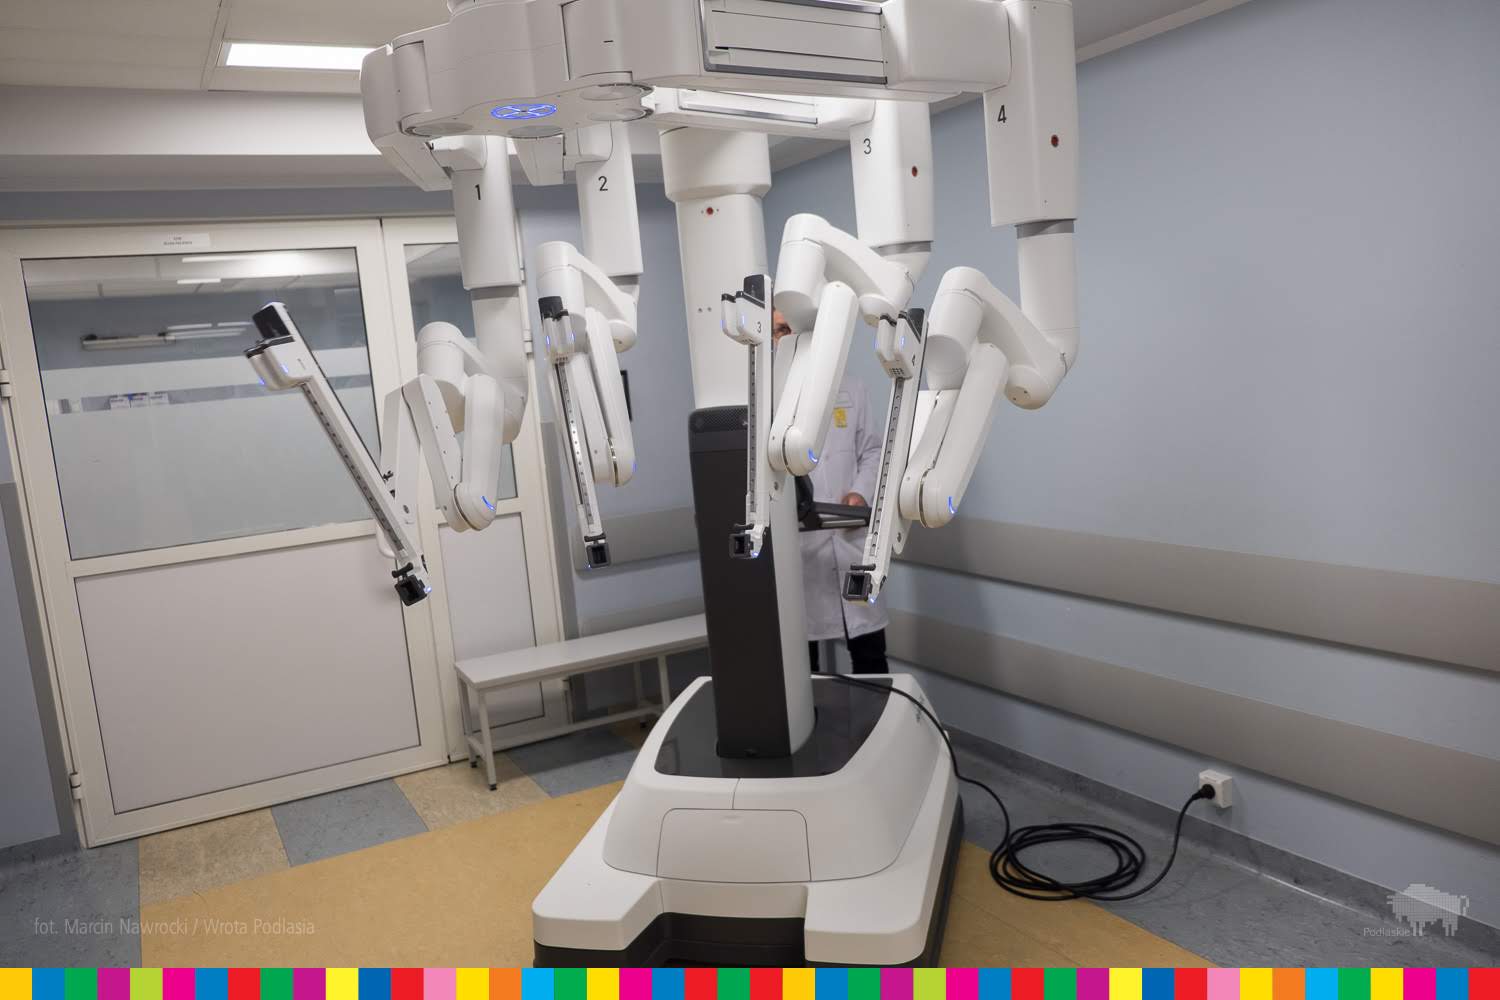 surgical robot in the hospital during presentation / Robot da Vinci stoi na korytarzu szpitala